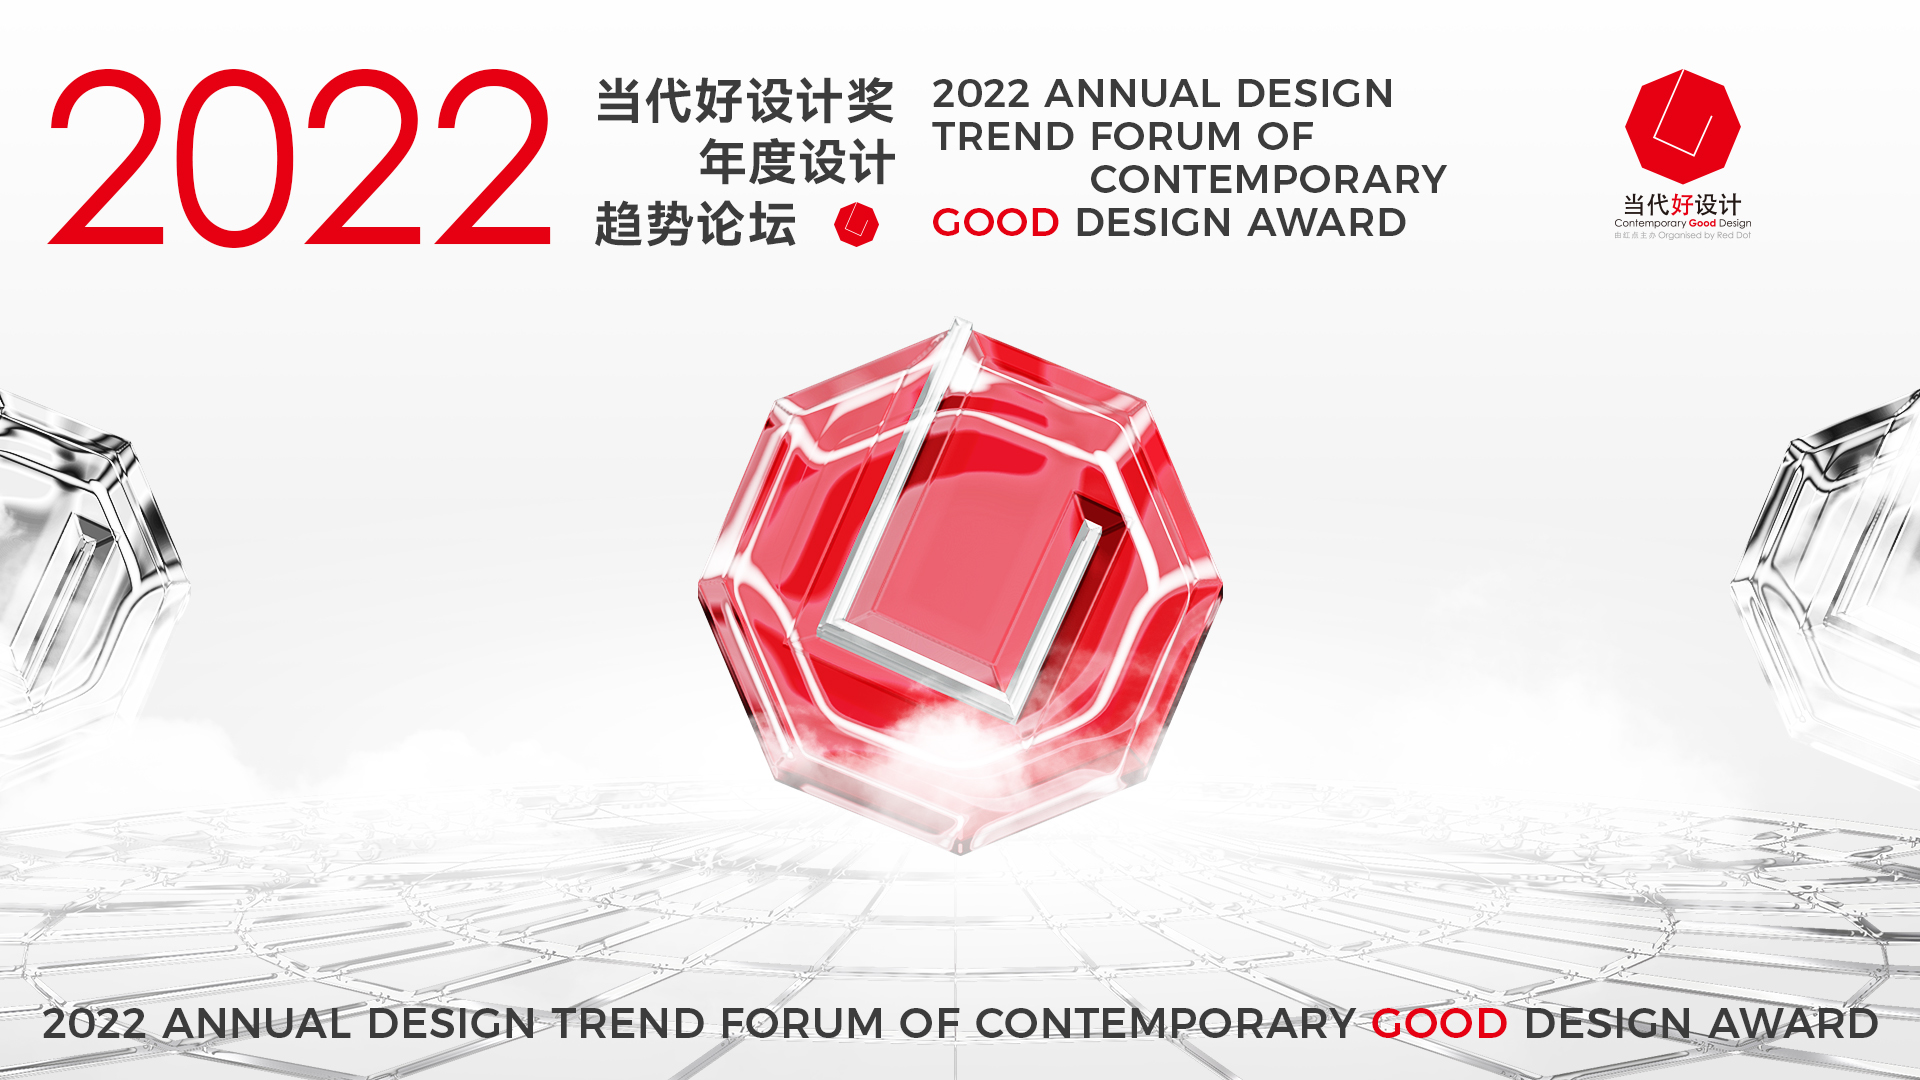 Design-Empowered and Future-Driven: Contemporary Good Design Award 2022 Announces 188 Winning Designs